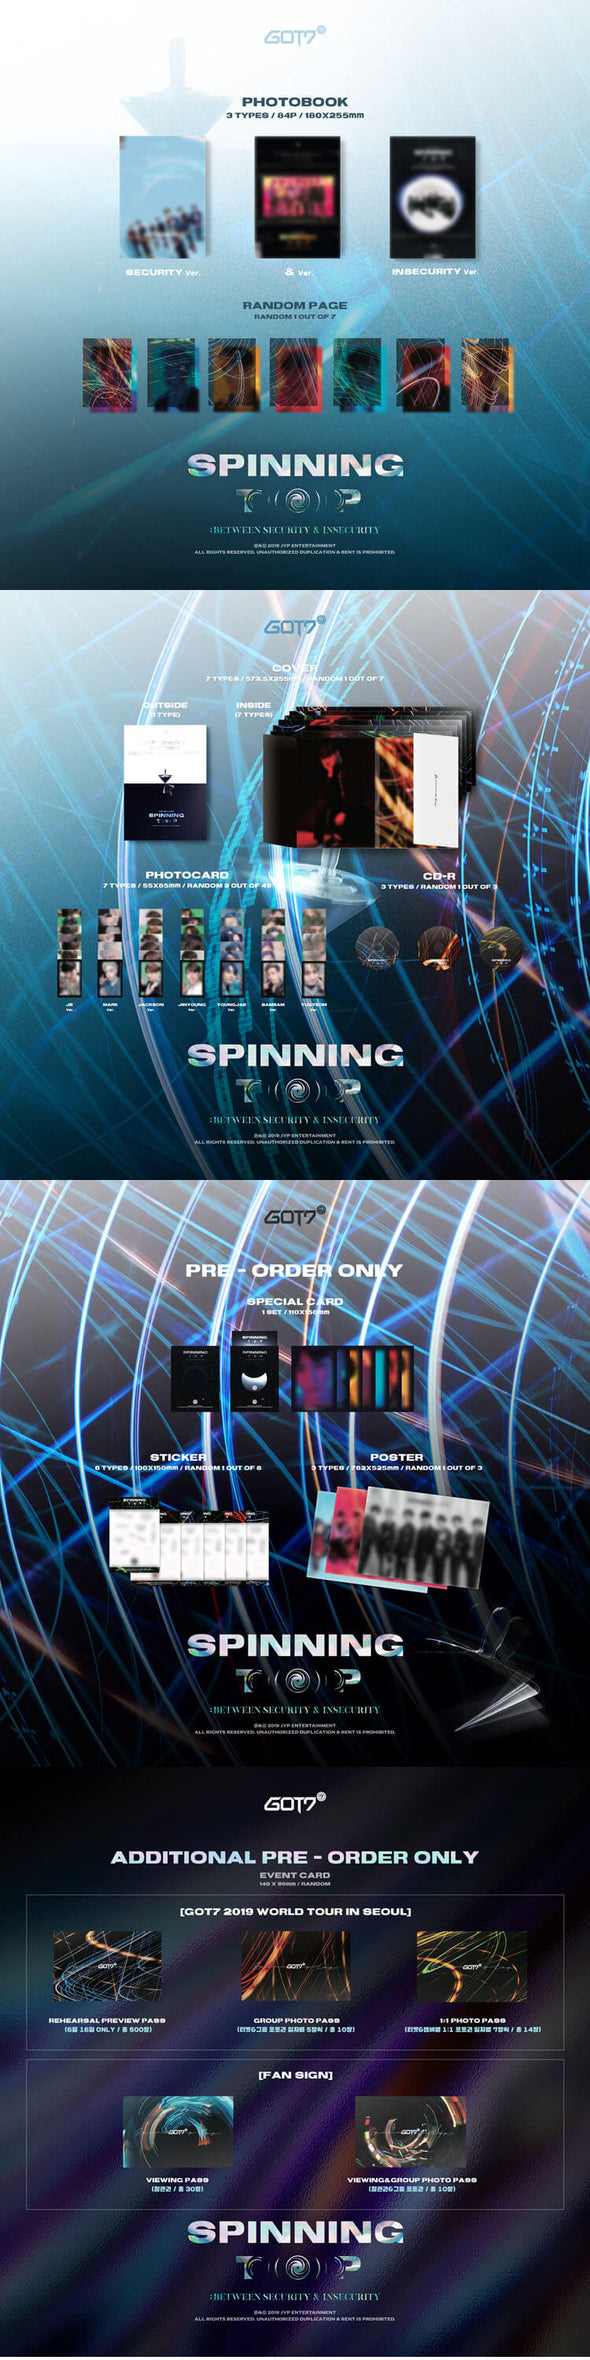 GOT7 - 'Spinning Top' Album